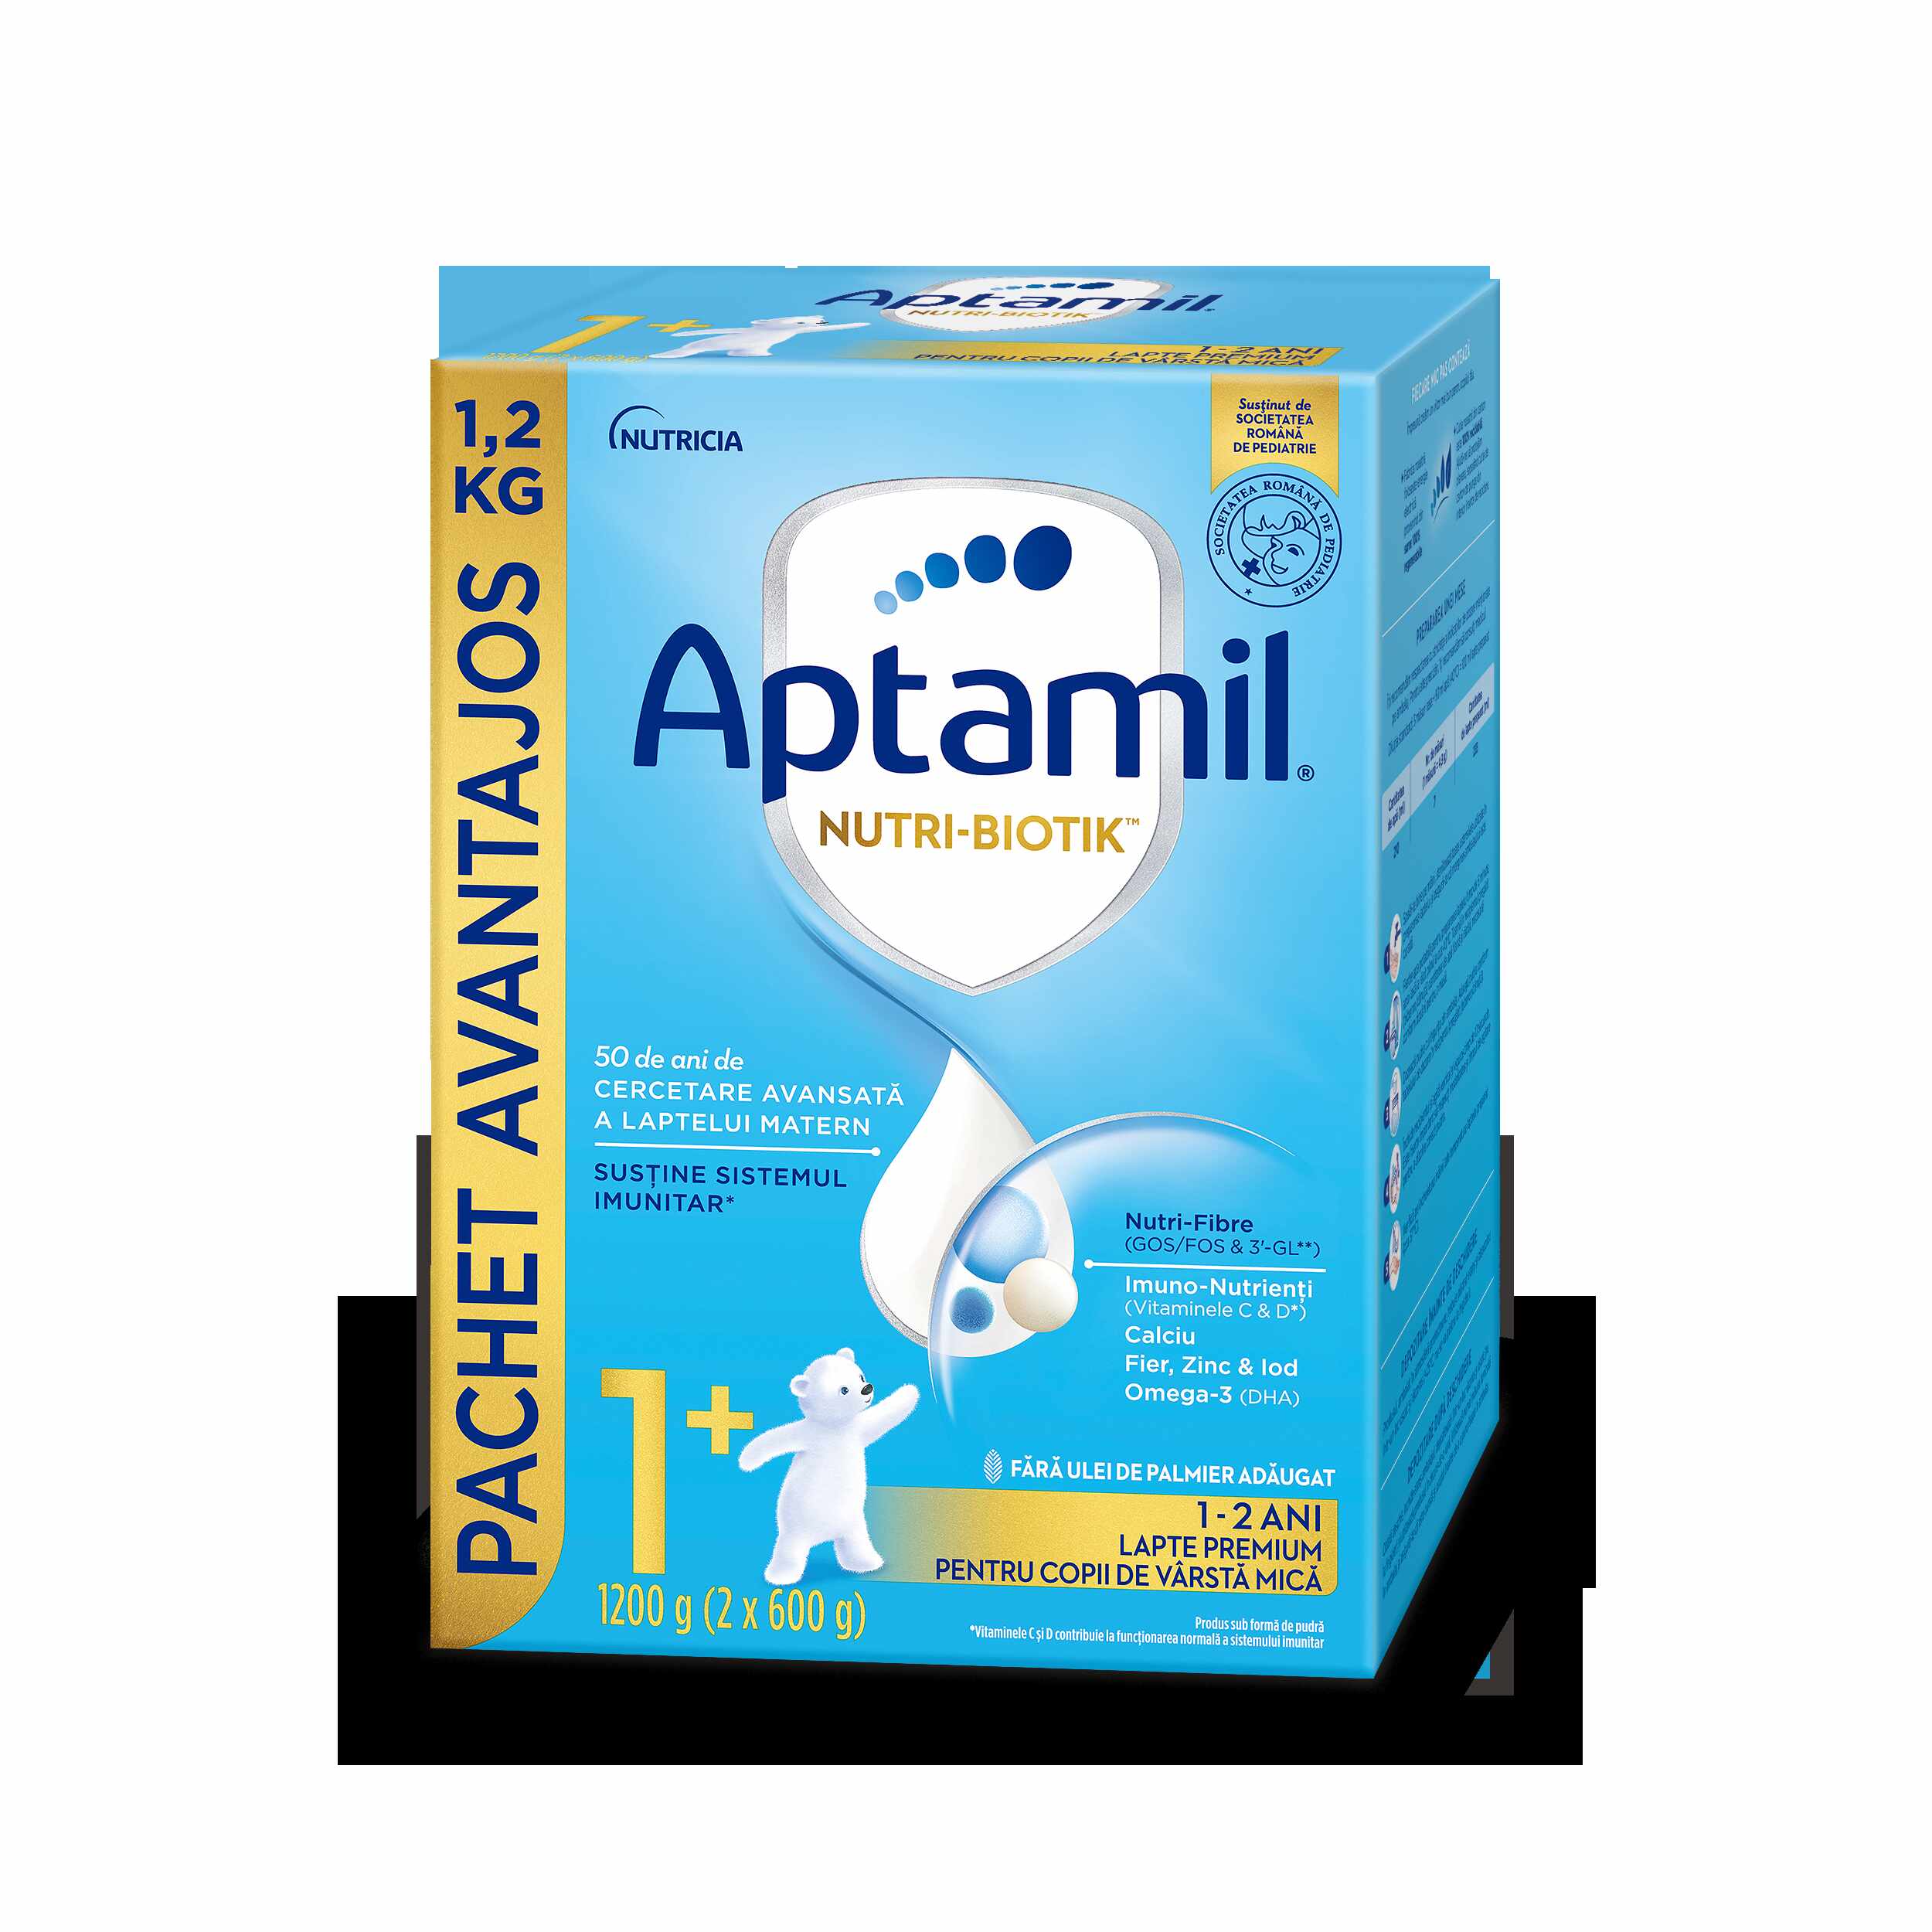 Lapte pentru copii de varsta mica, Aptamil® NUTRI-BIOTIK™ 1+, 1.200 g, 1-2 ani